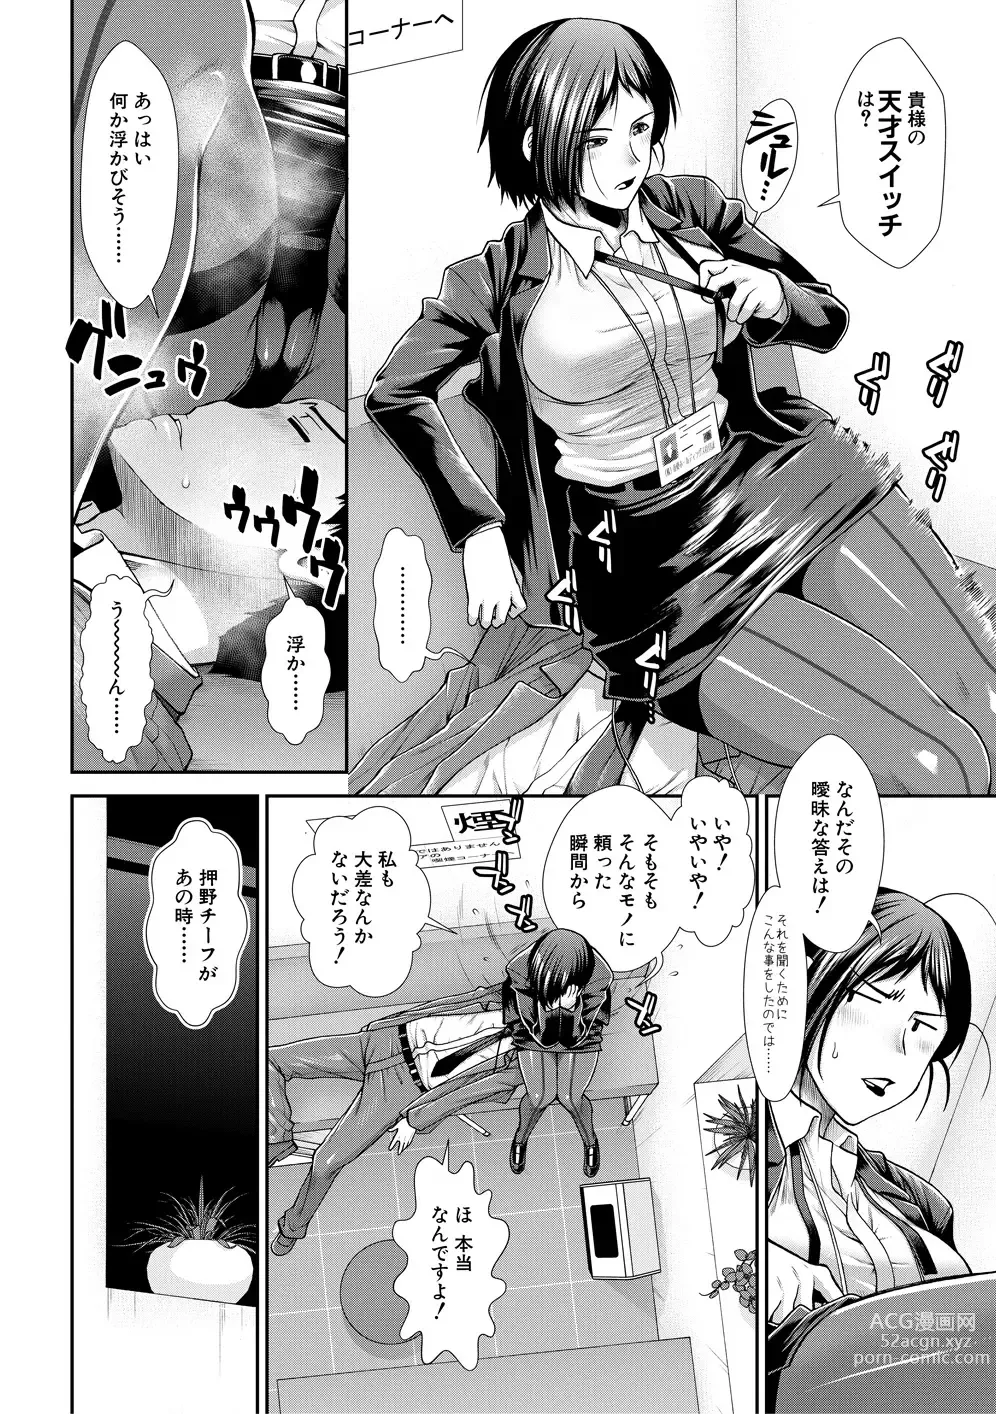 Page 10 of manga Ketsuhara